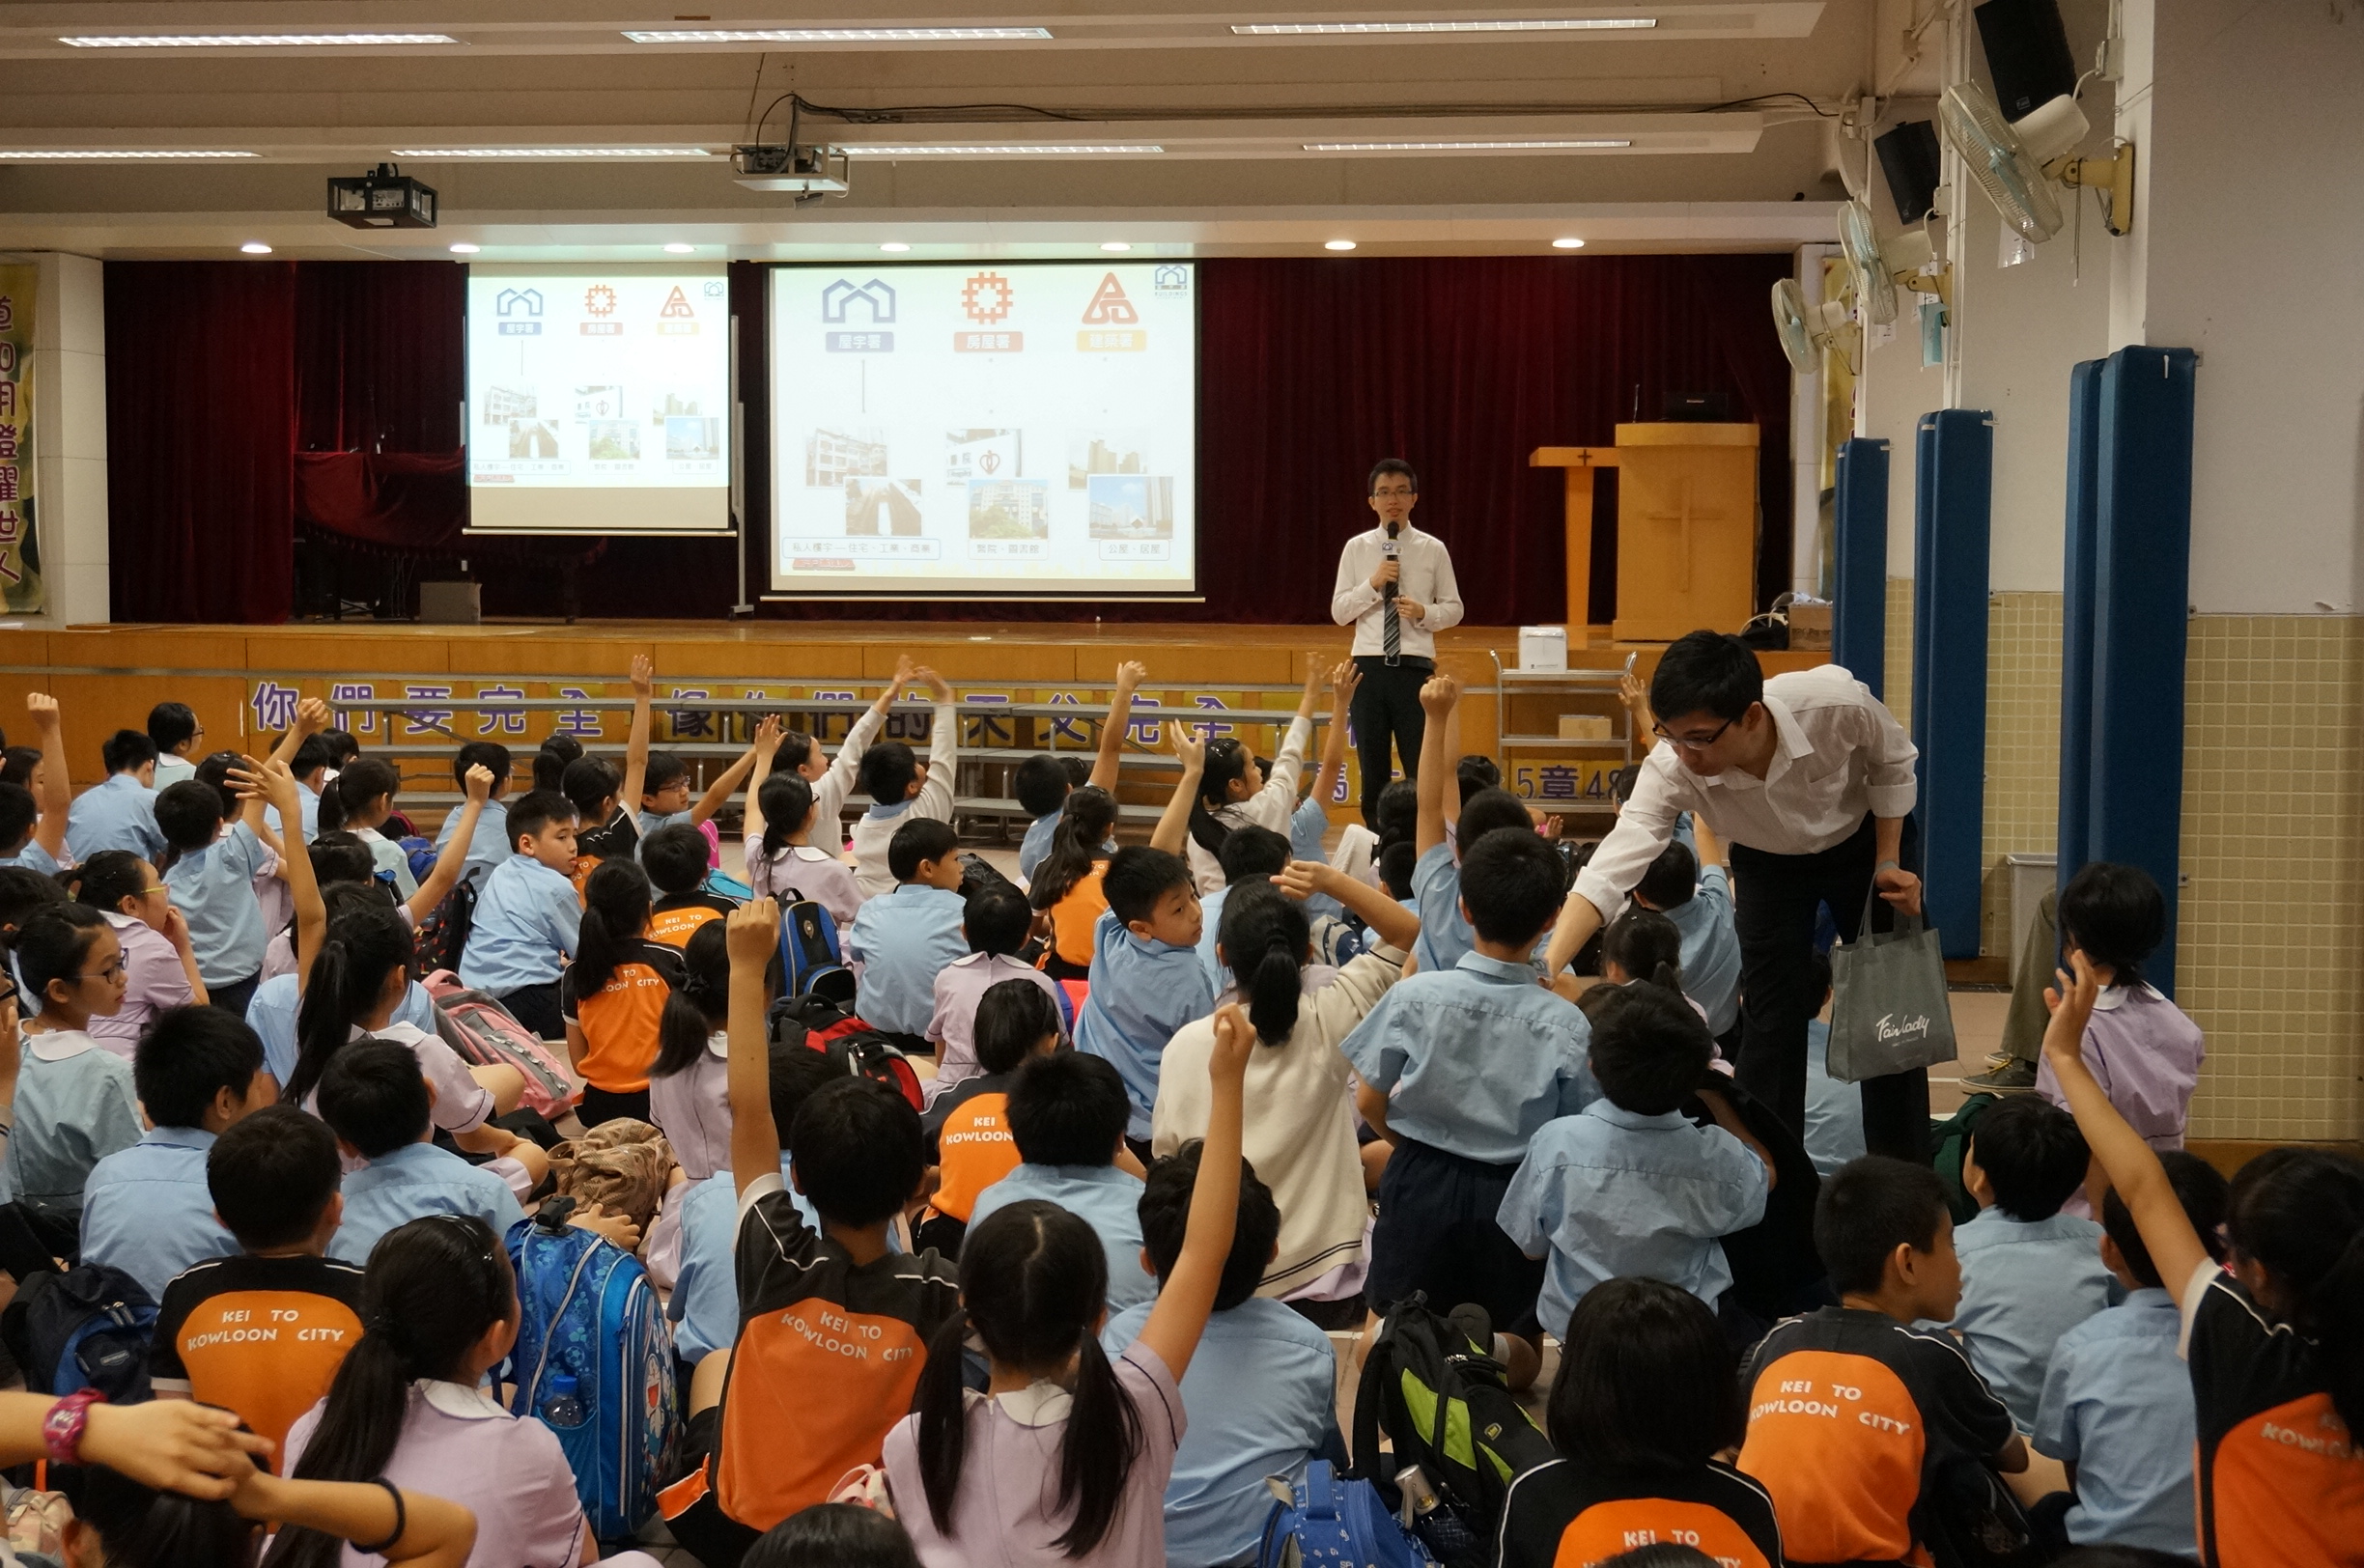 CCC Wanchai Church Kei To Primary School (Kowloon City)